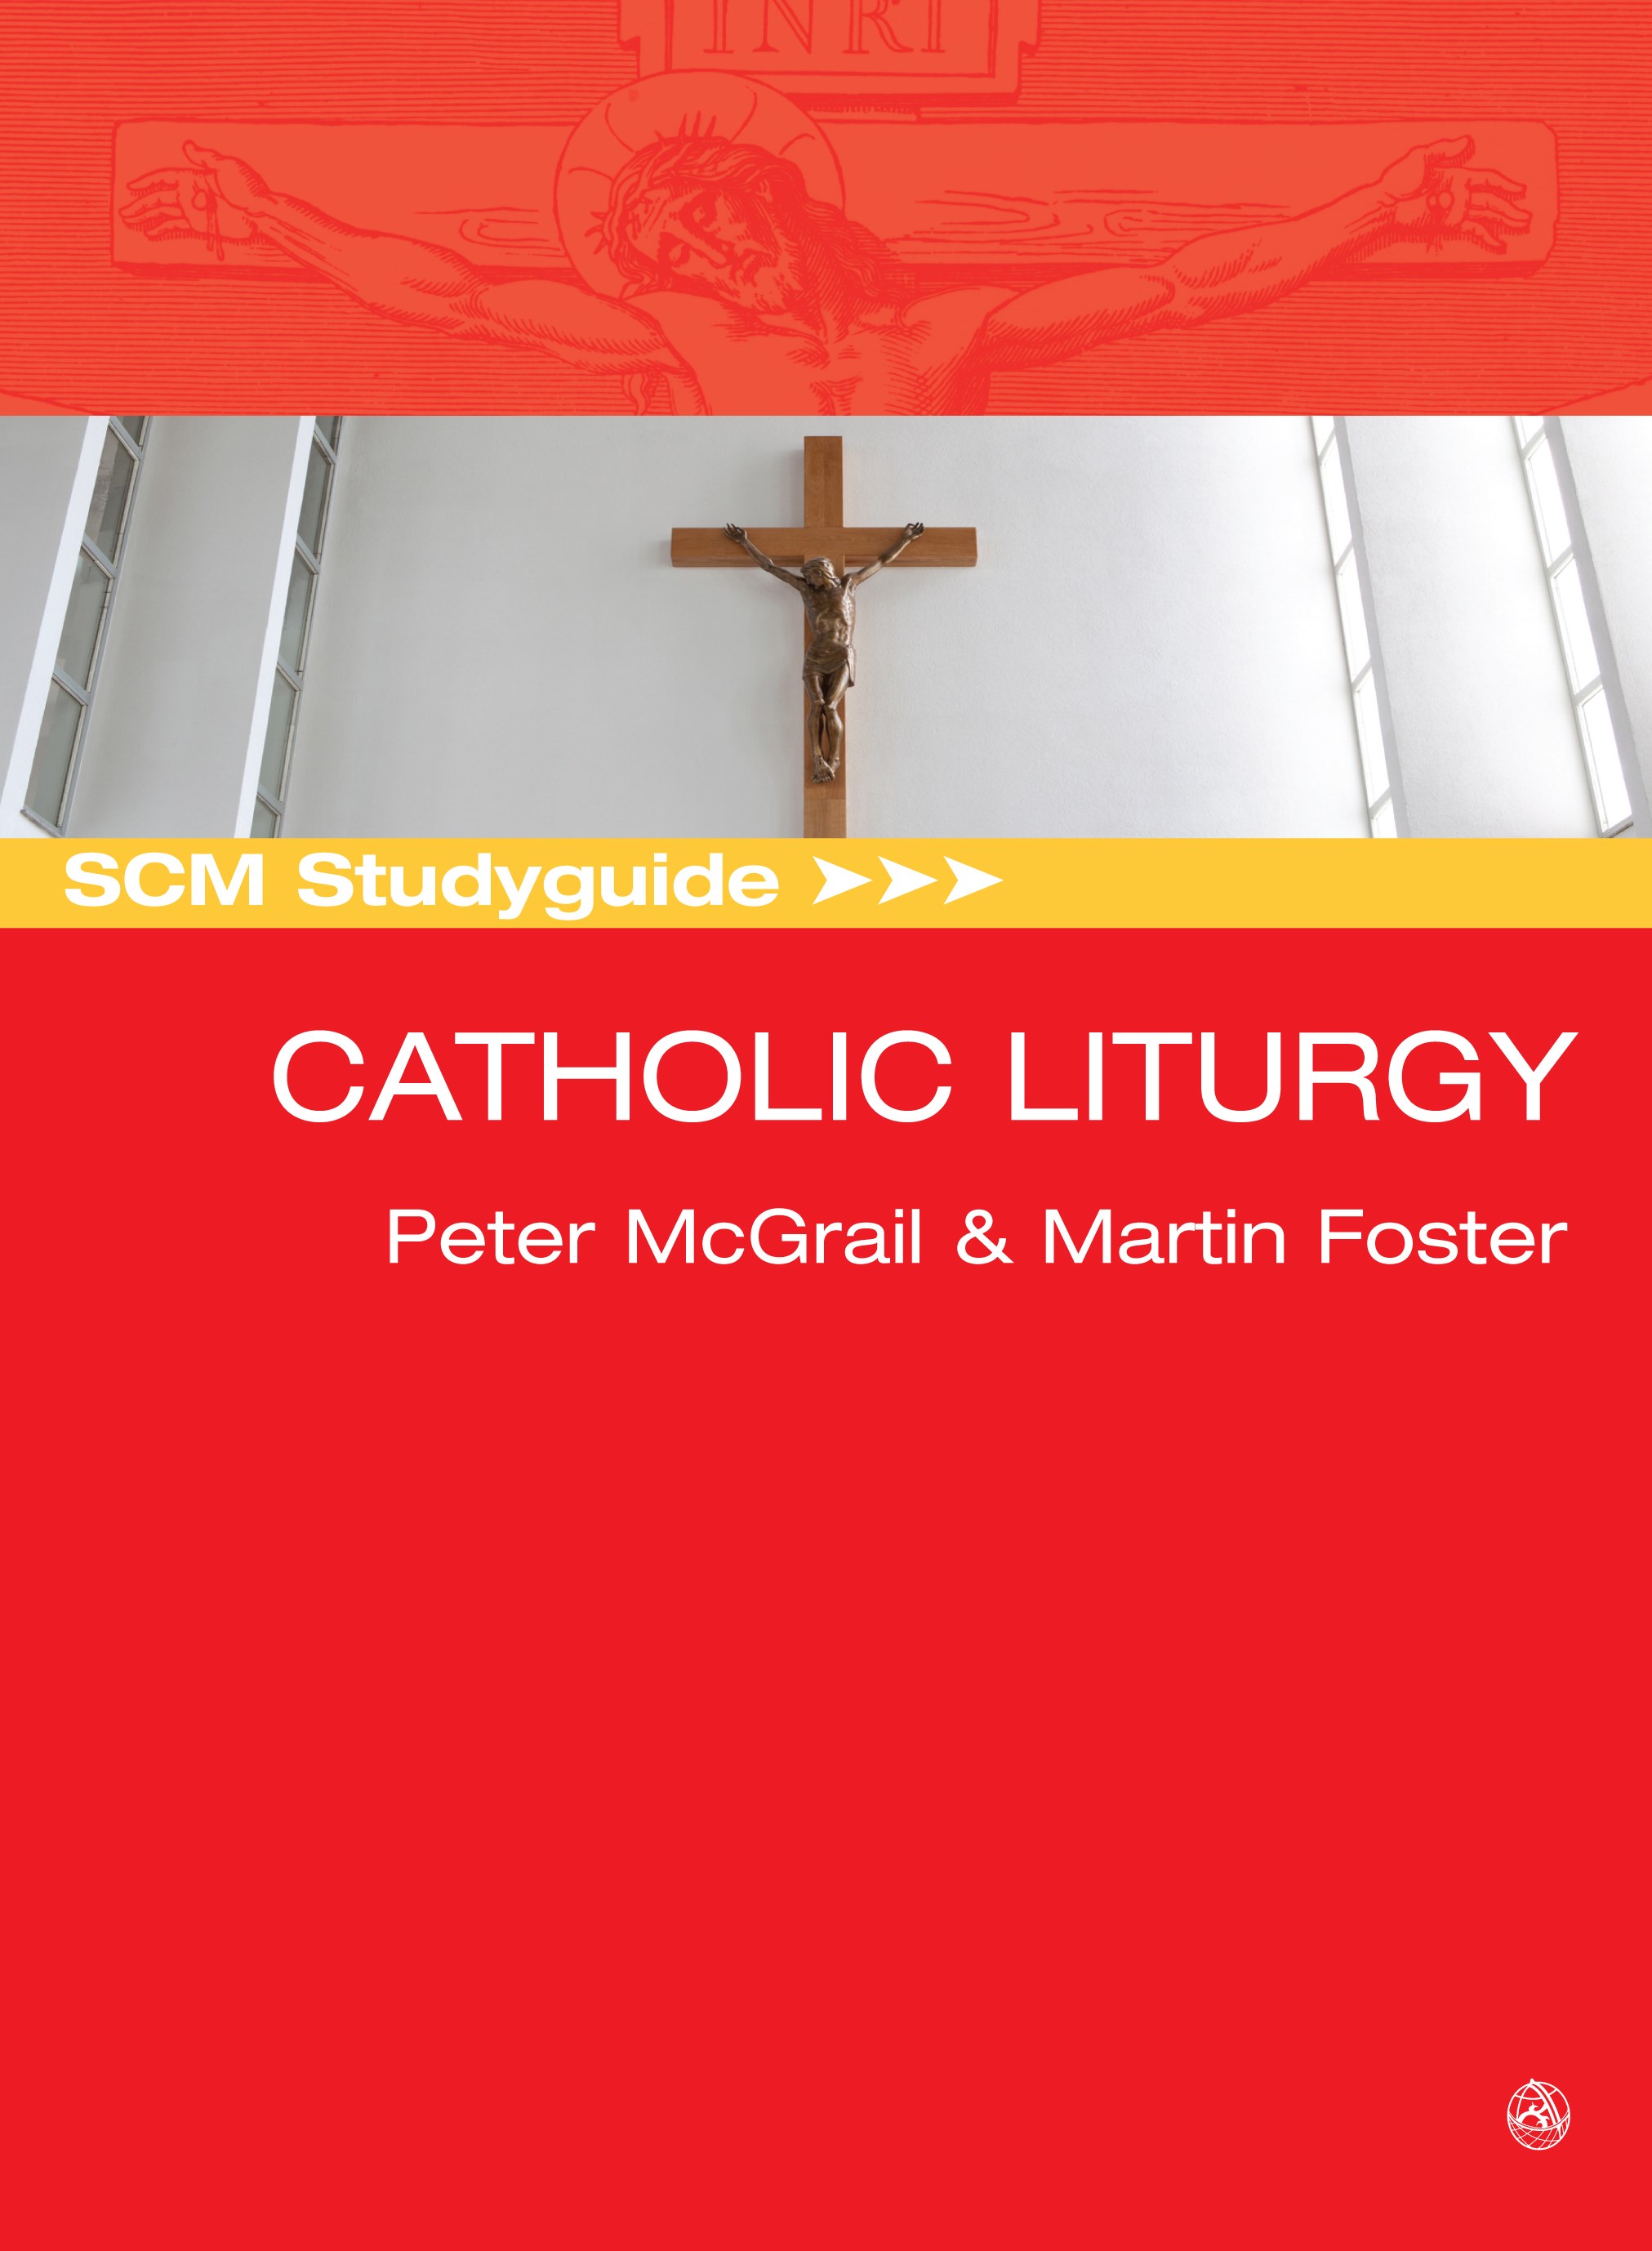 SCM Studyguide: Catholic Liturgy